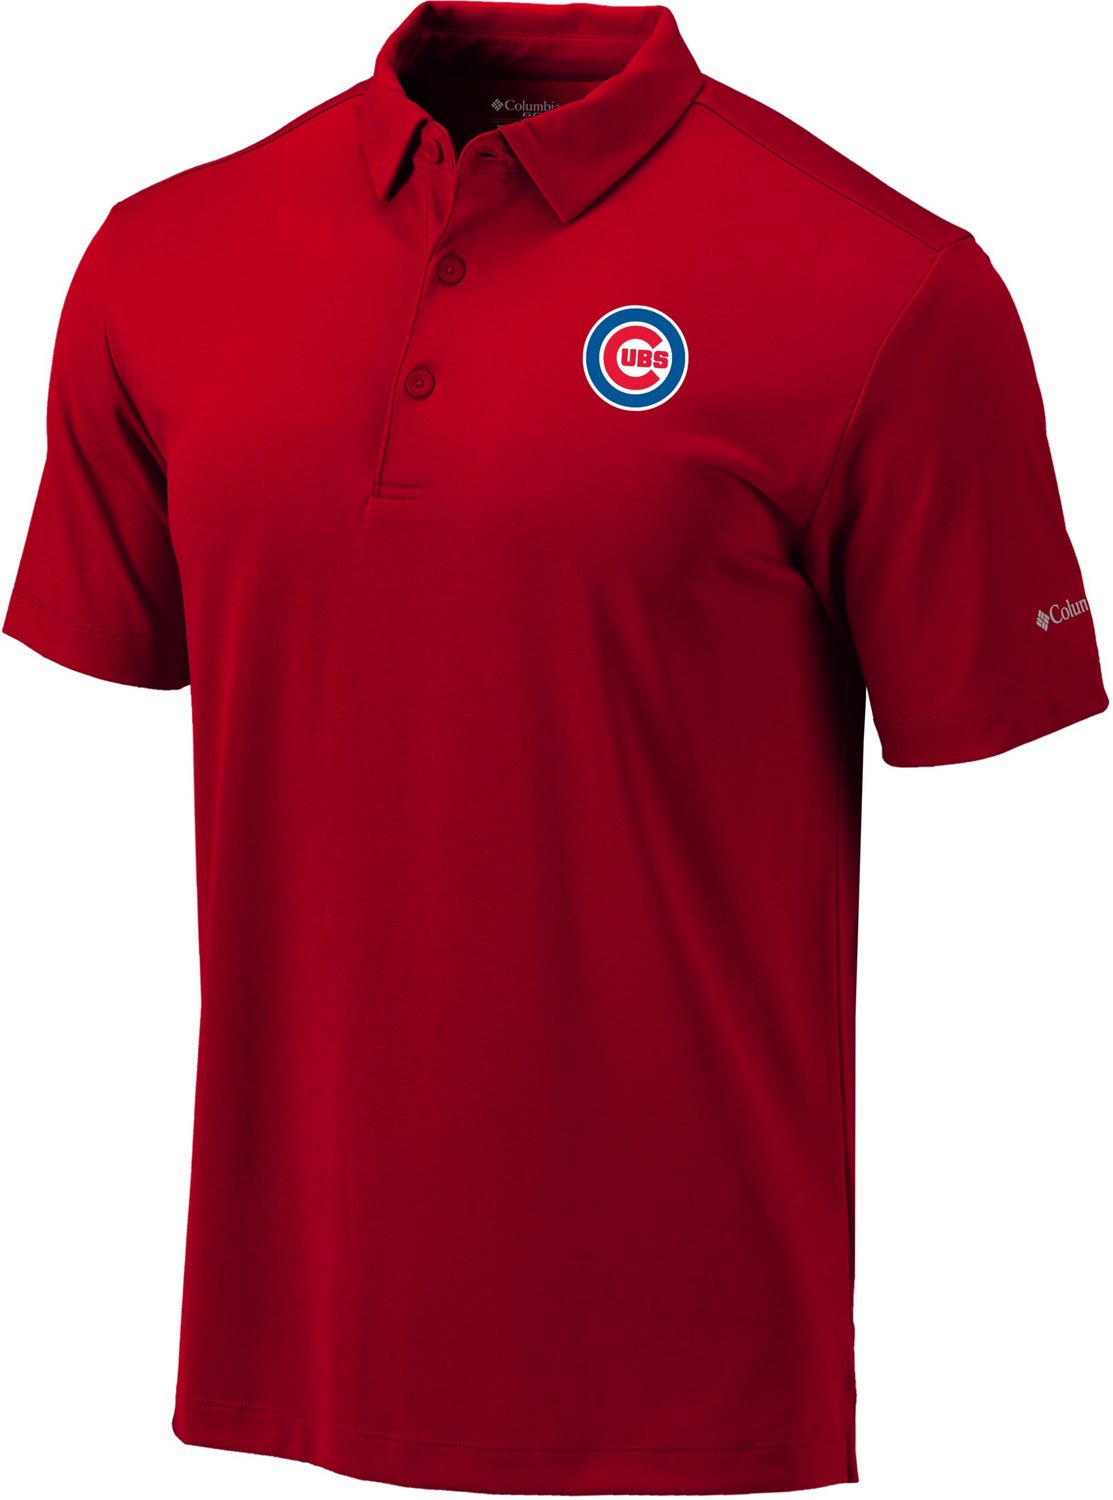 Columbia Sportswear Men's Chicago Cubs Drive Polo Shirt